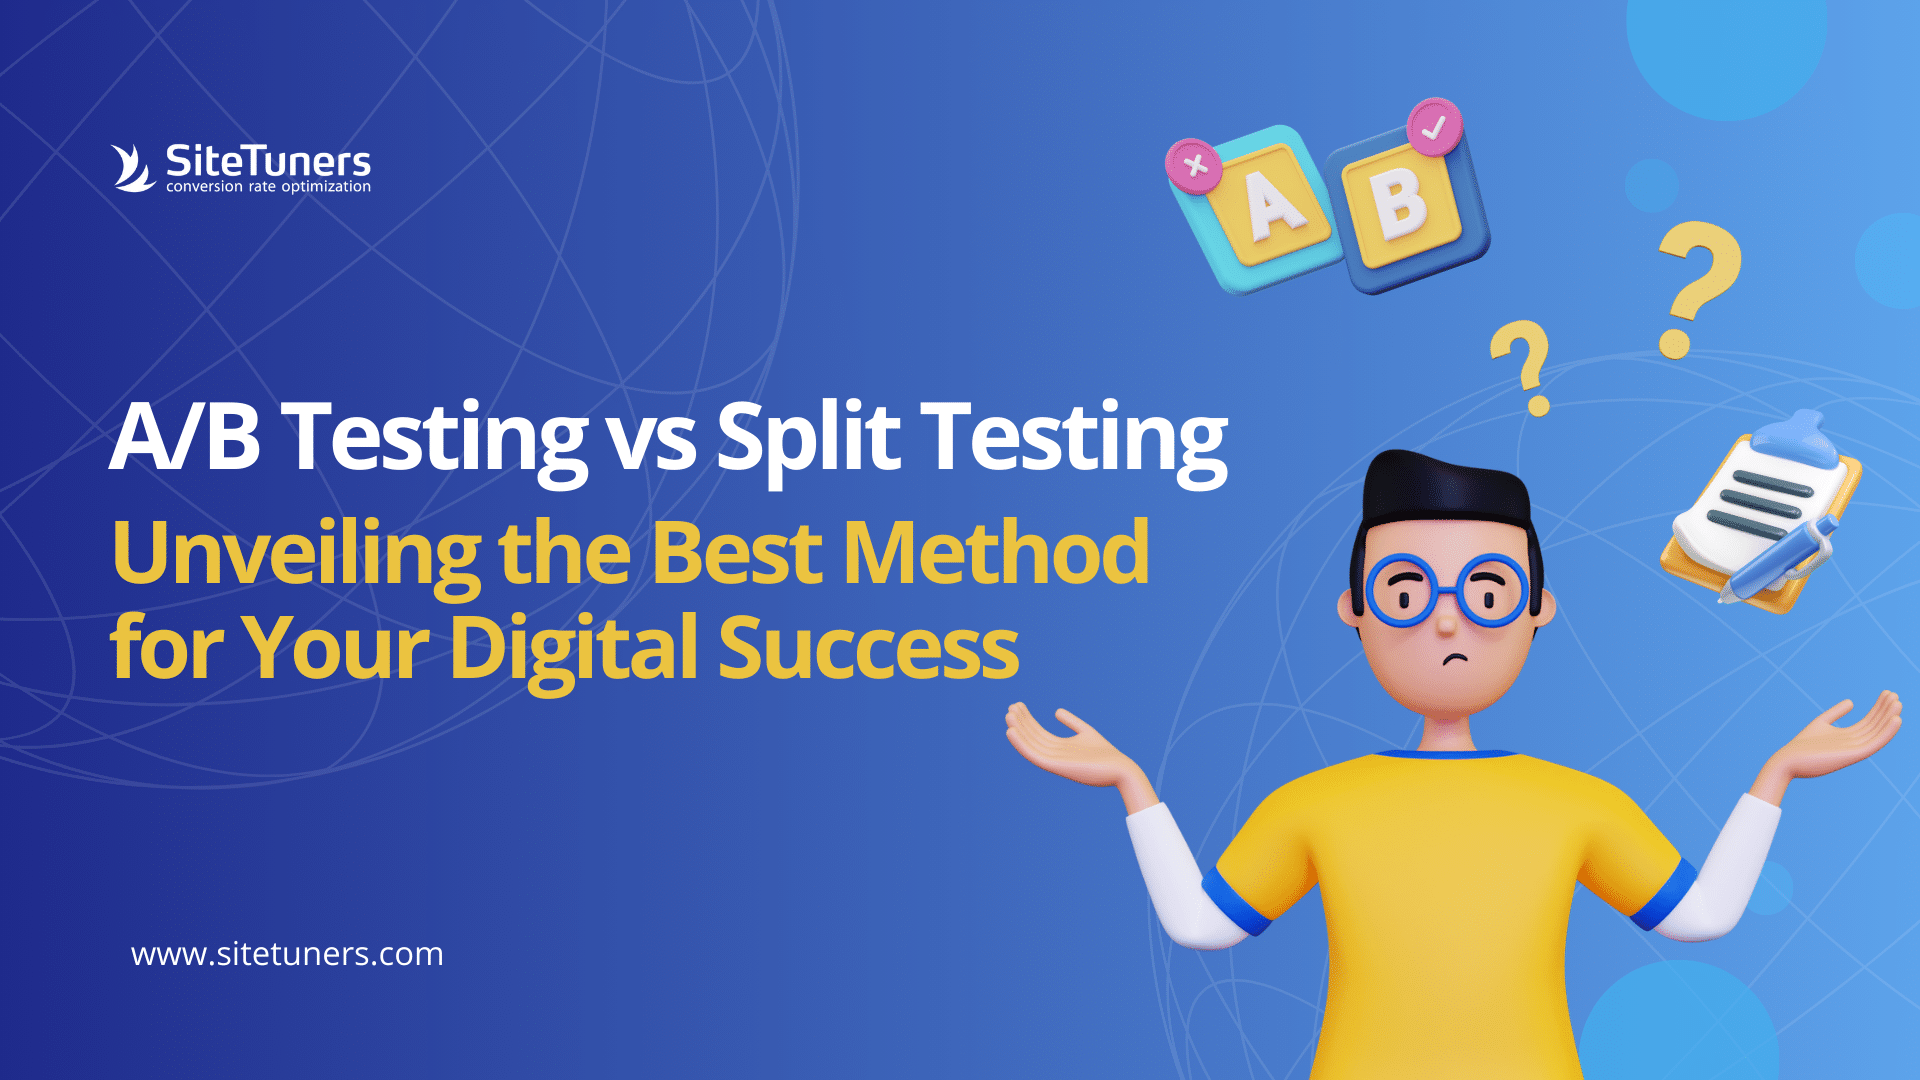 A/B testing vs split testing